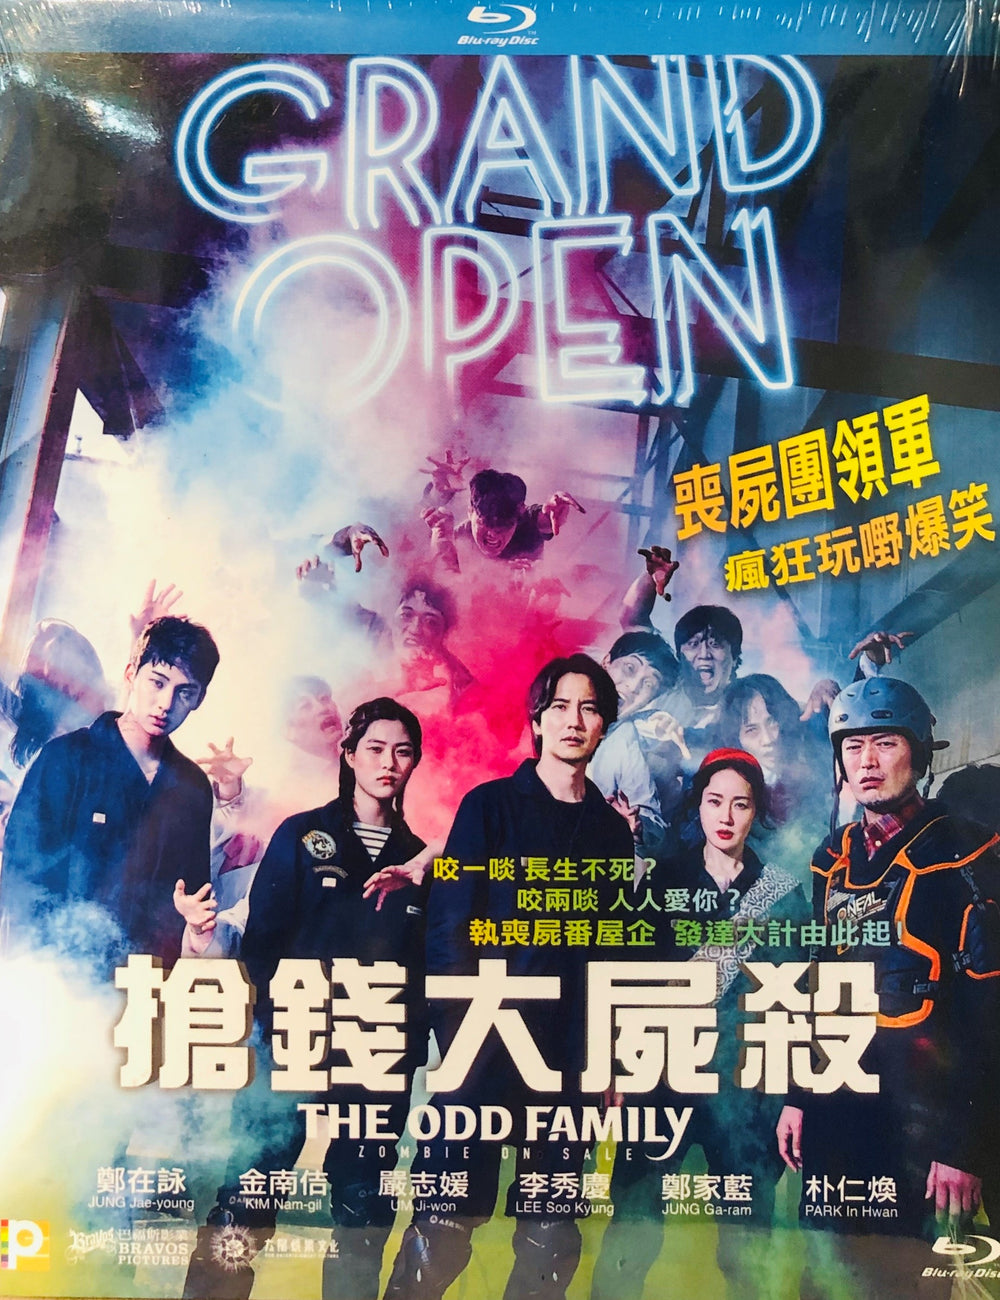 The Odd Family Zombie On Sale 2019 (Korean Movie) BLU-RAY with English Subtitles (Region A) 搶錢大屍殺